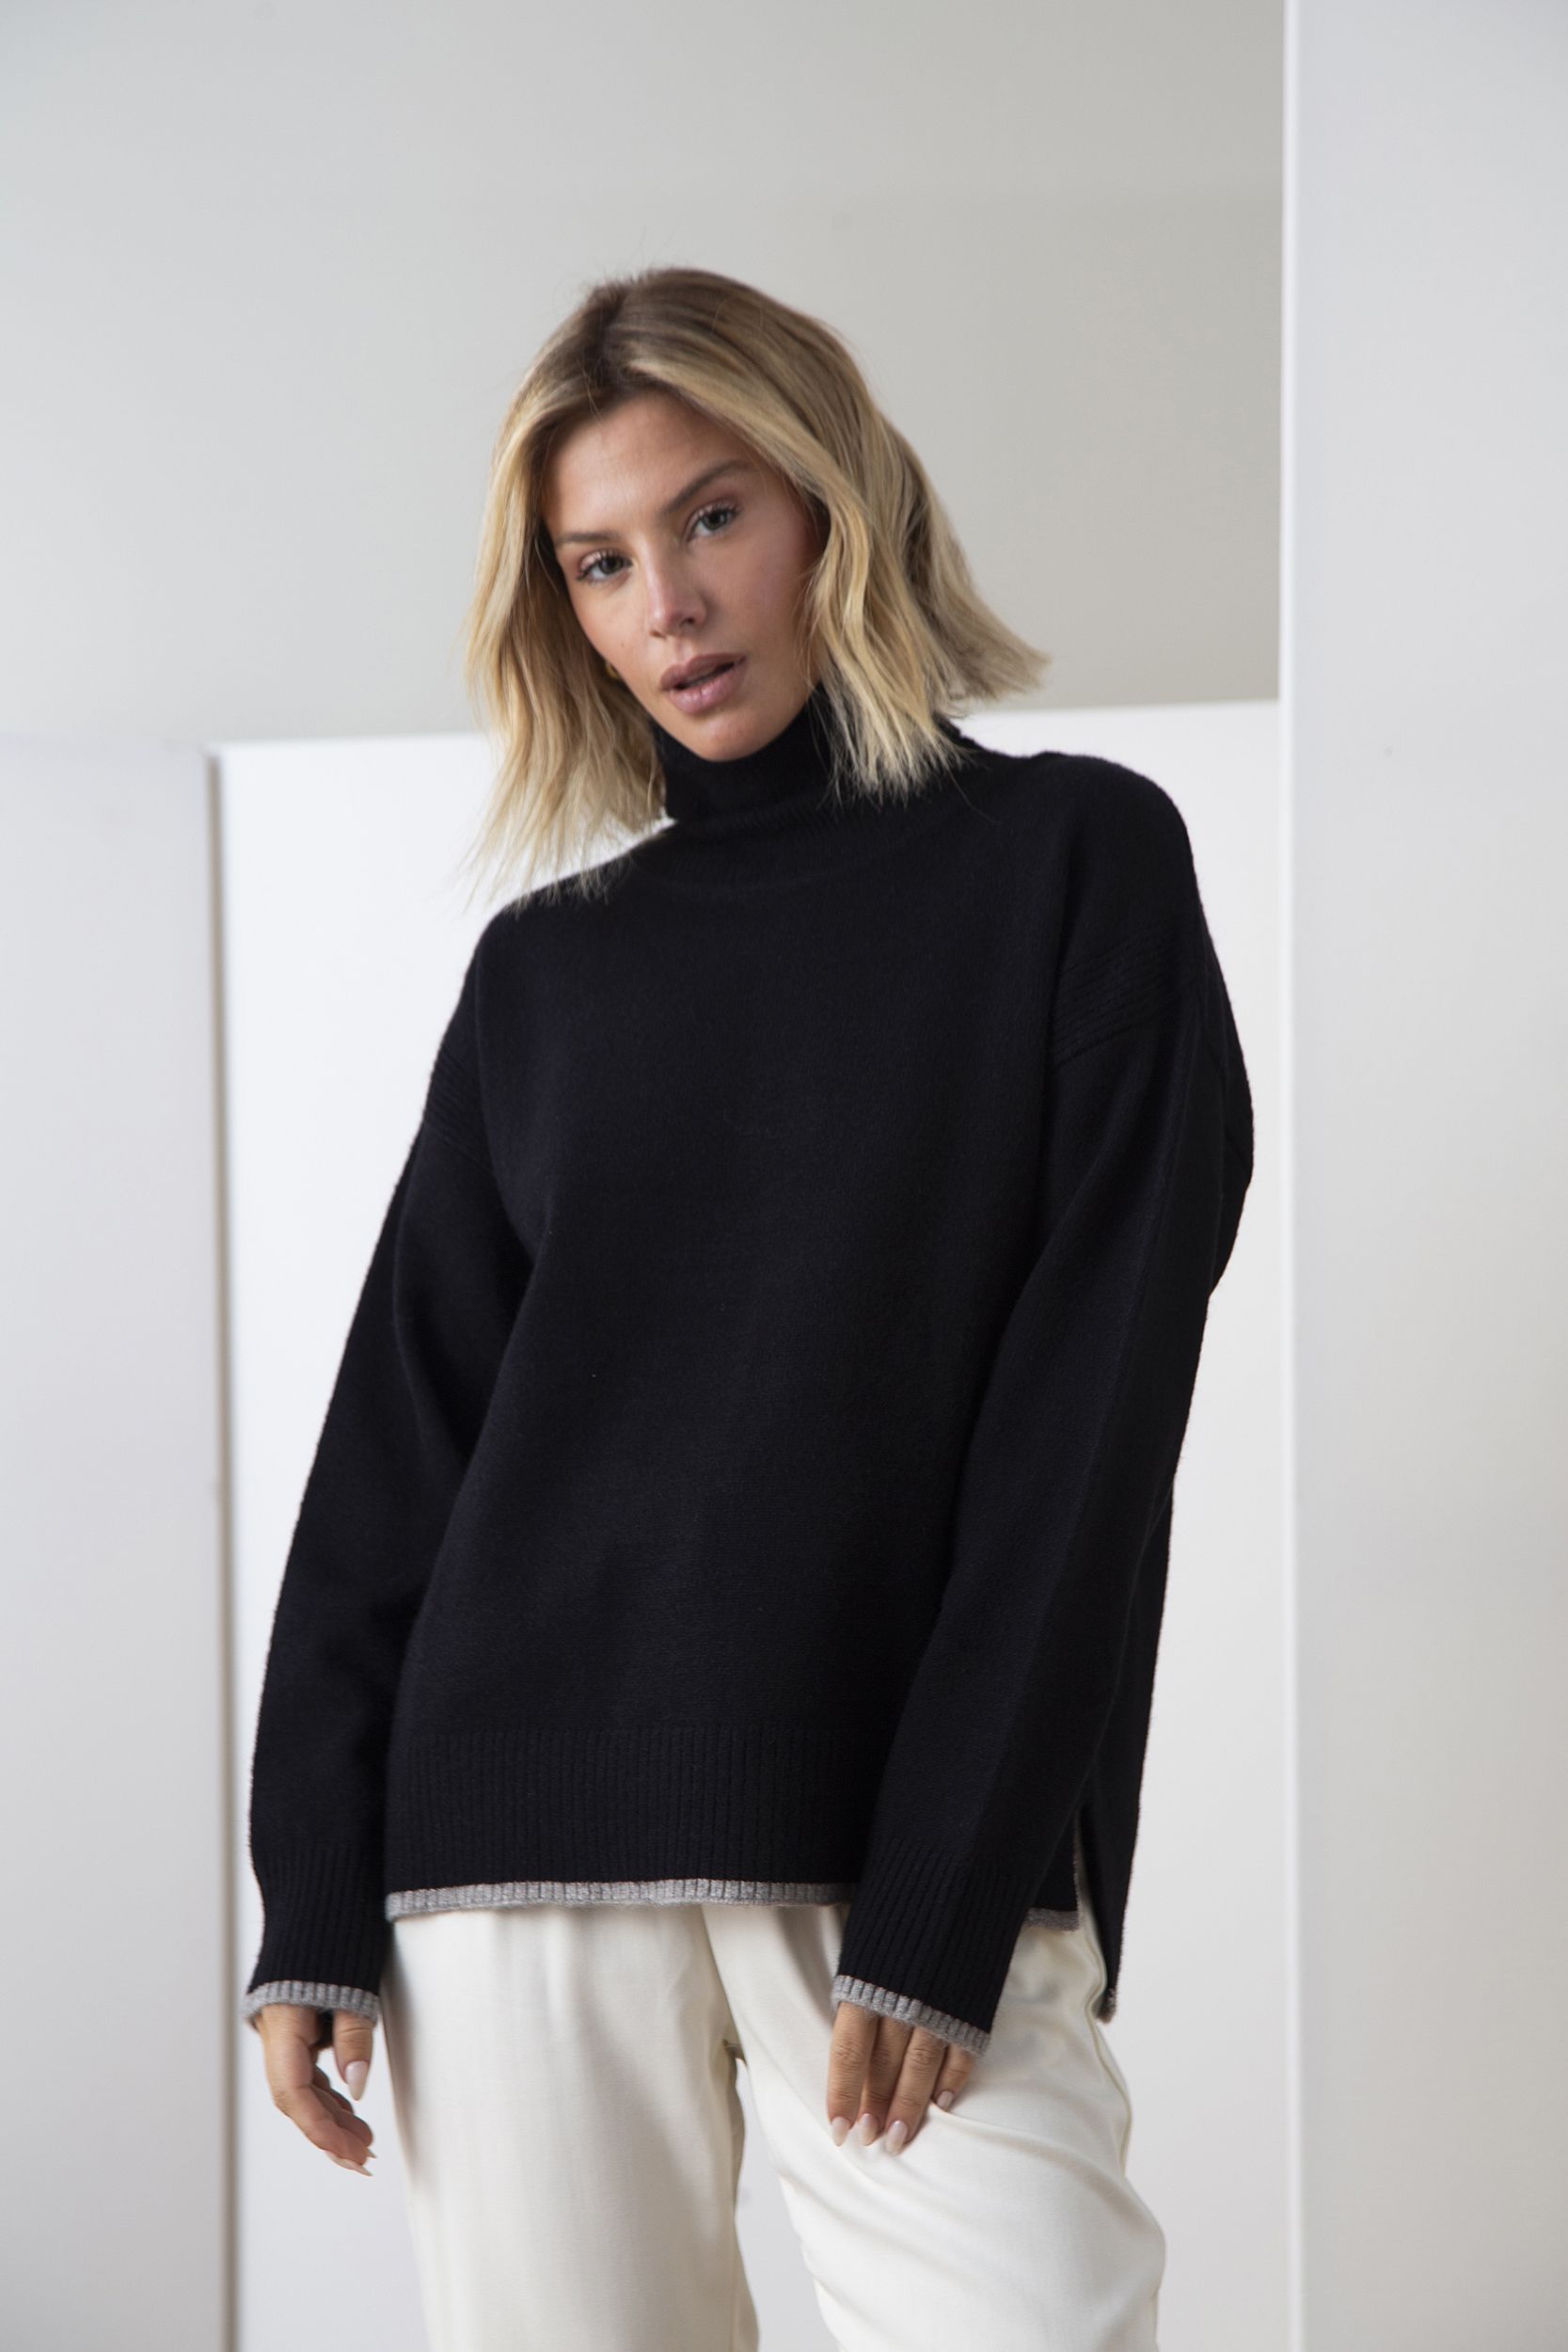 754-sweater-polera-alessandra-black-2.jpg